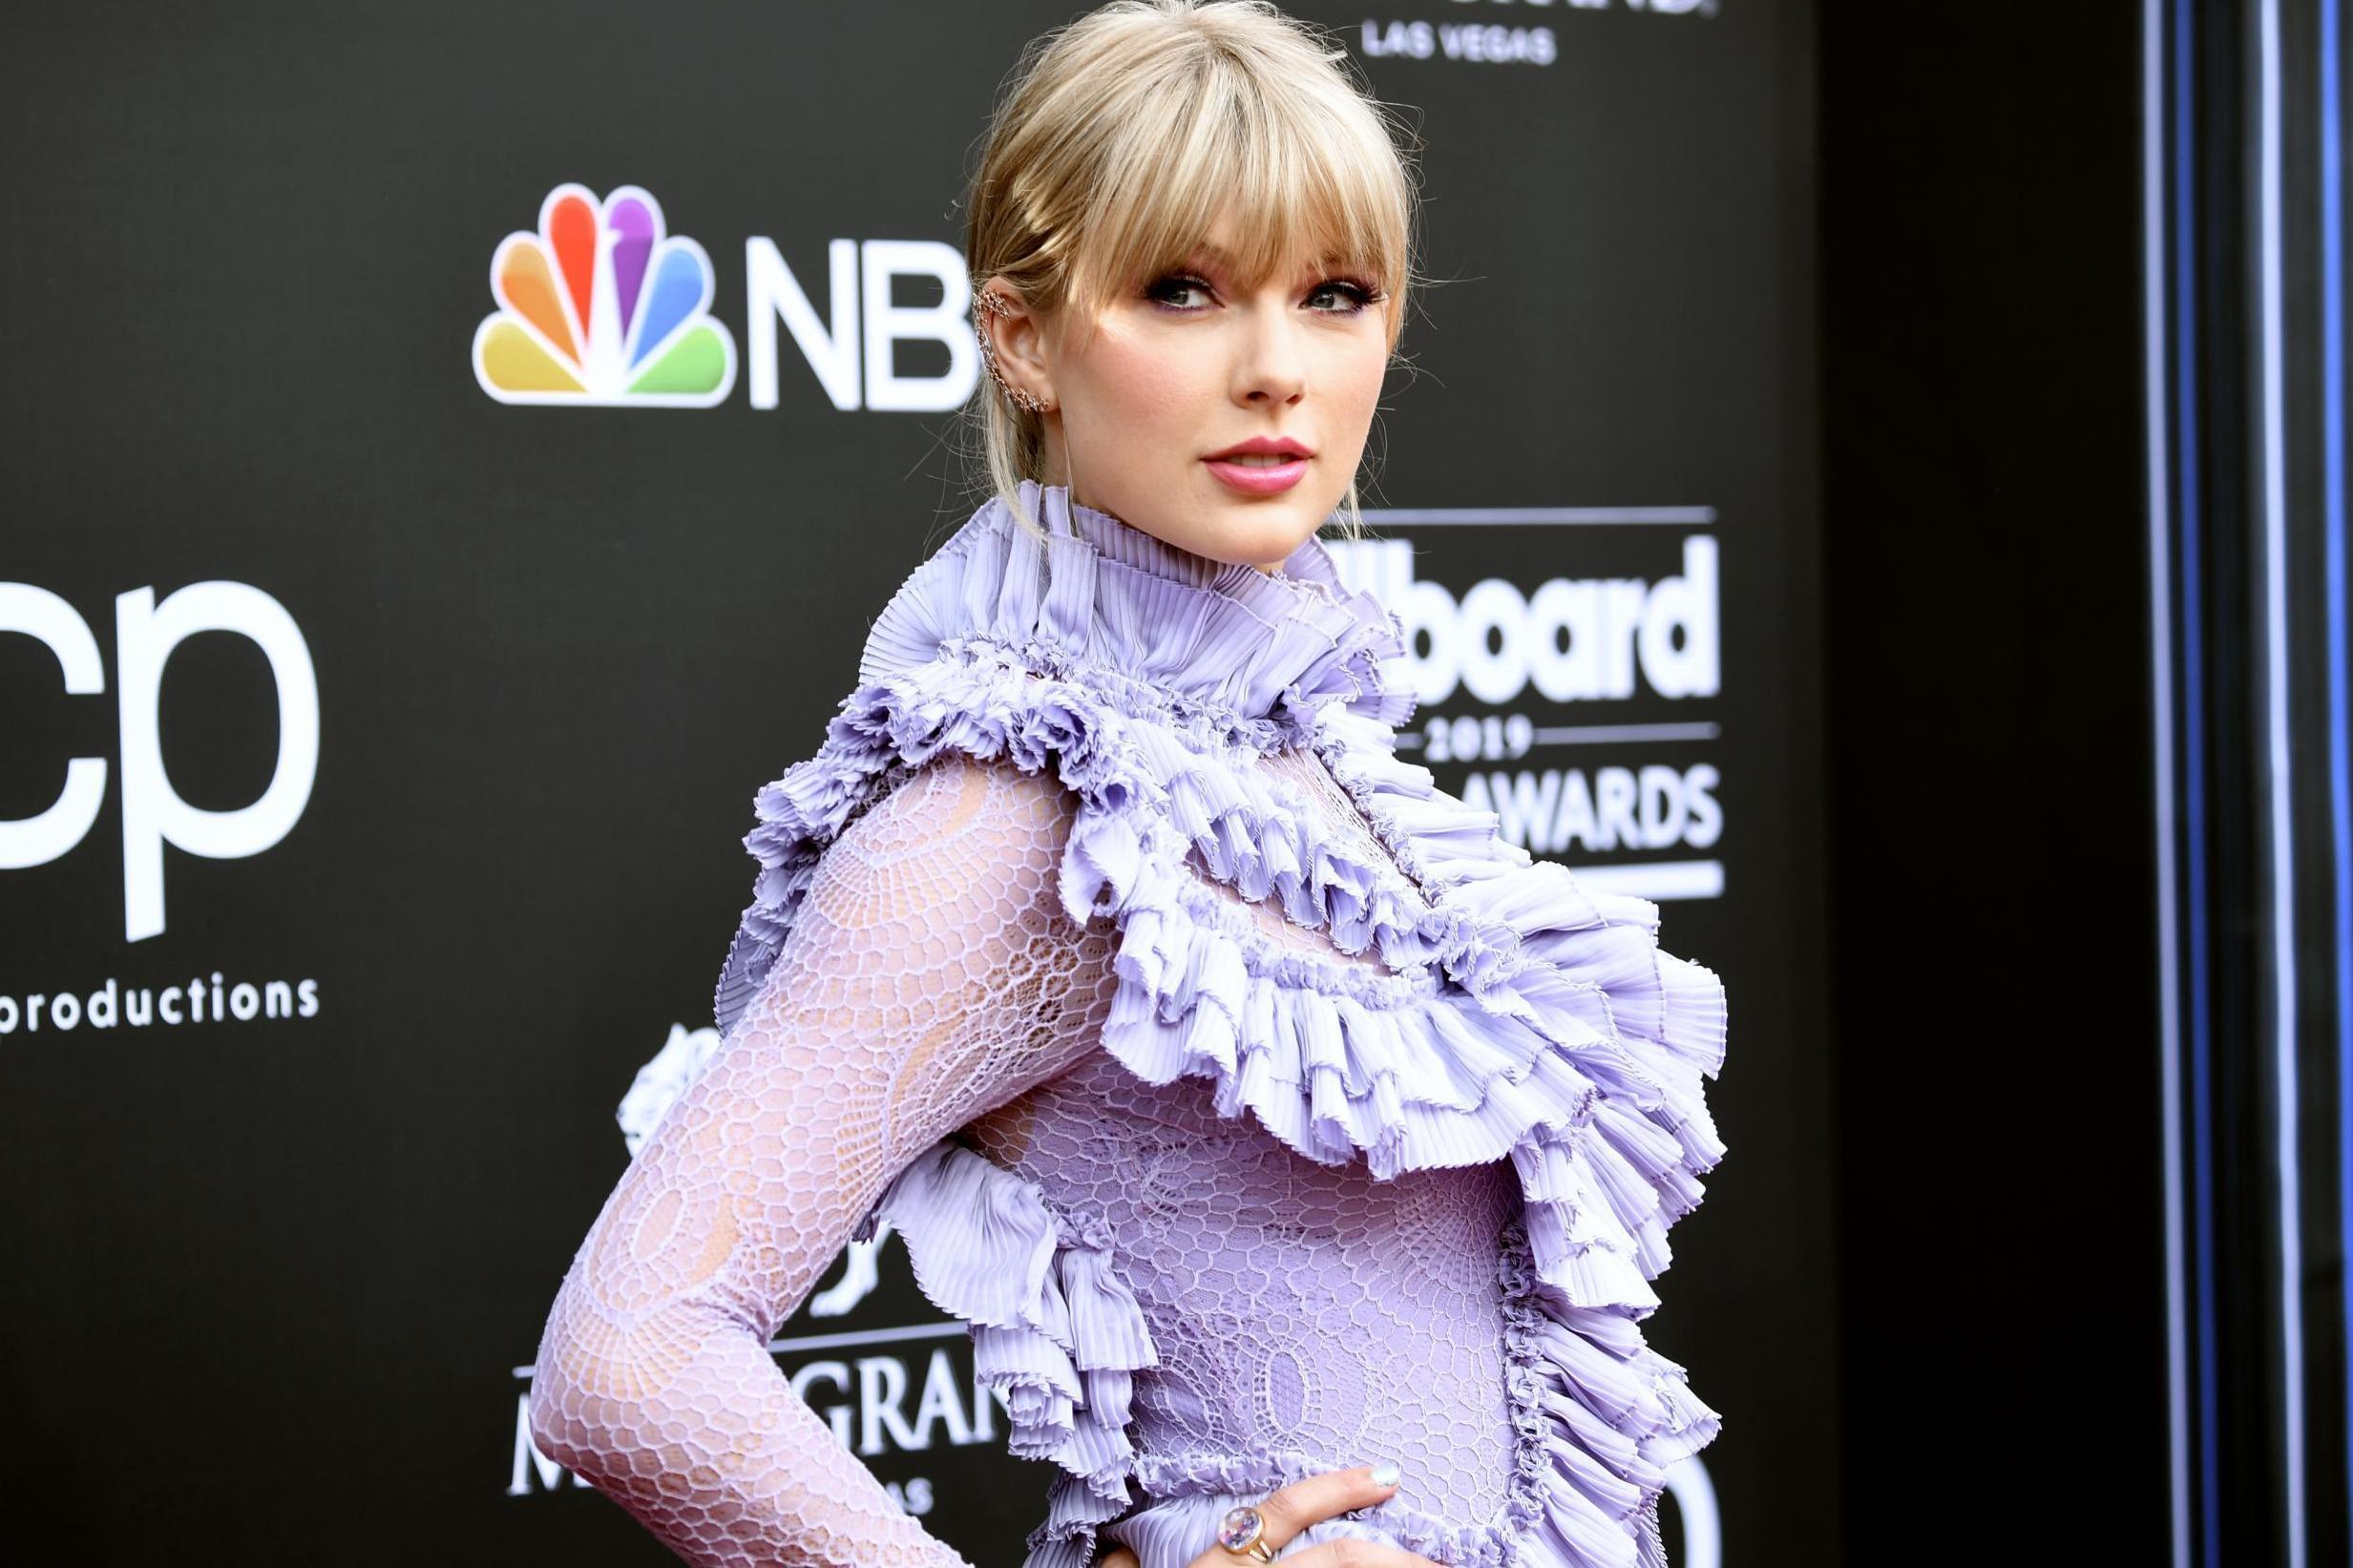 Flipboard: Taylor Swift's New Merch Has a Hilarious Typo